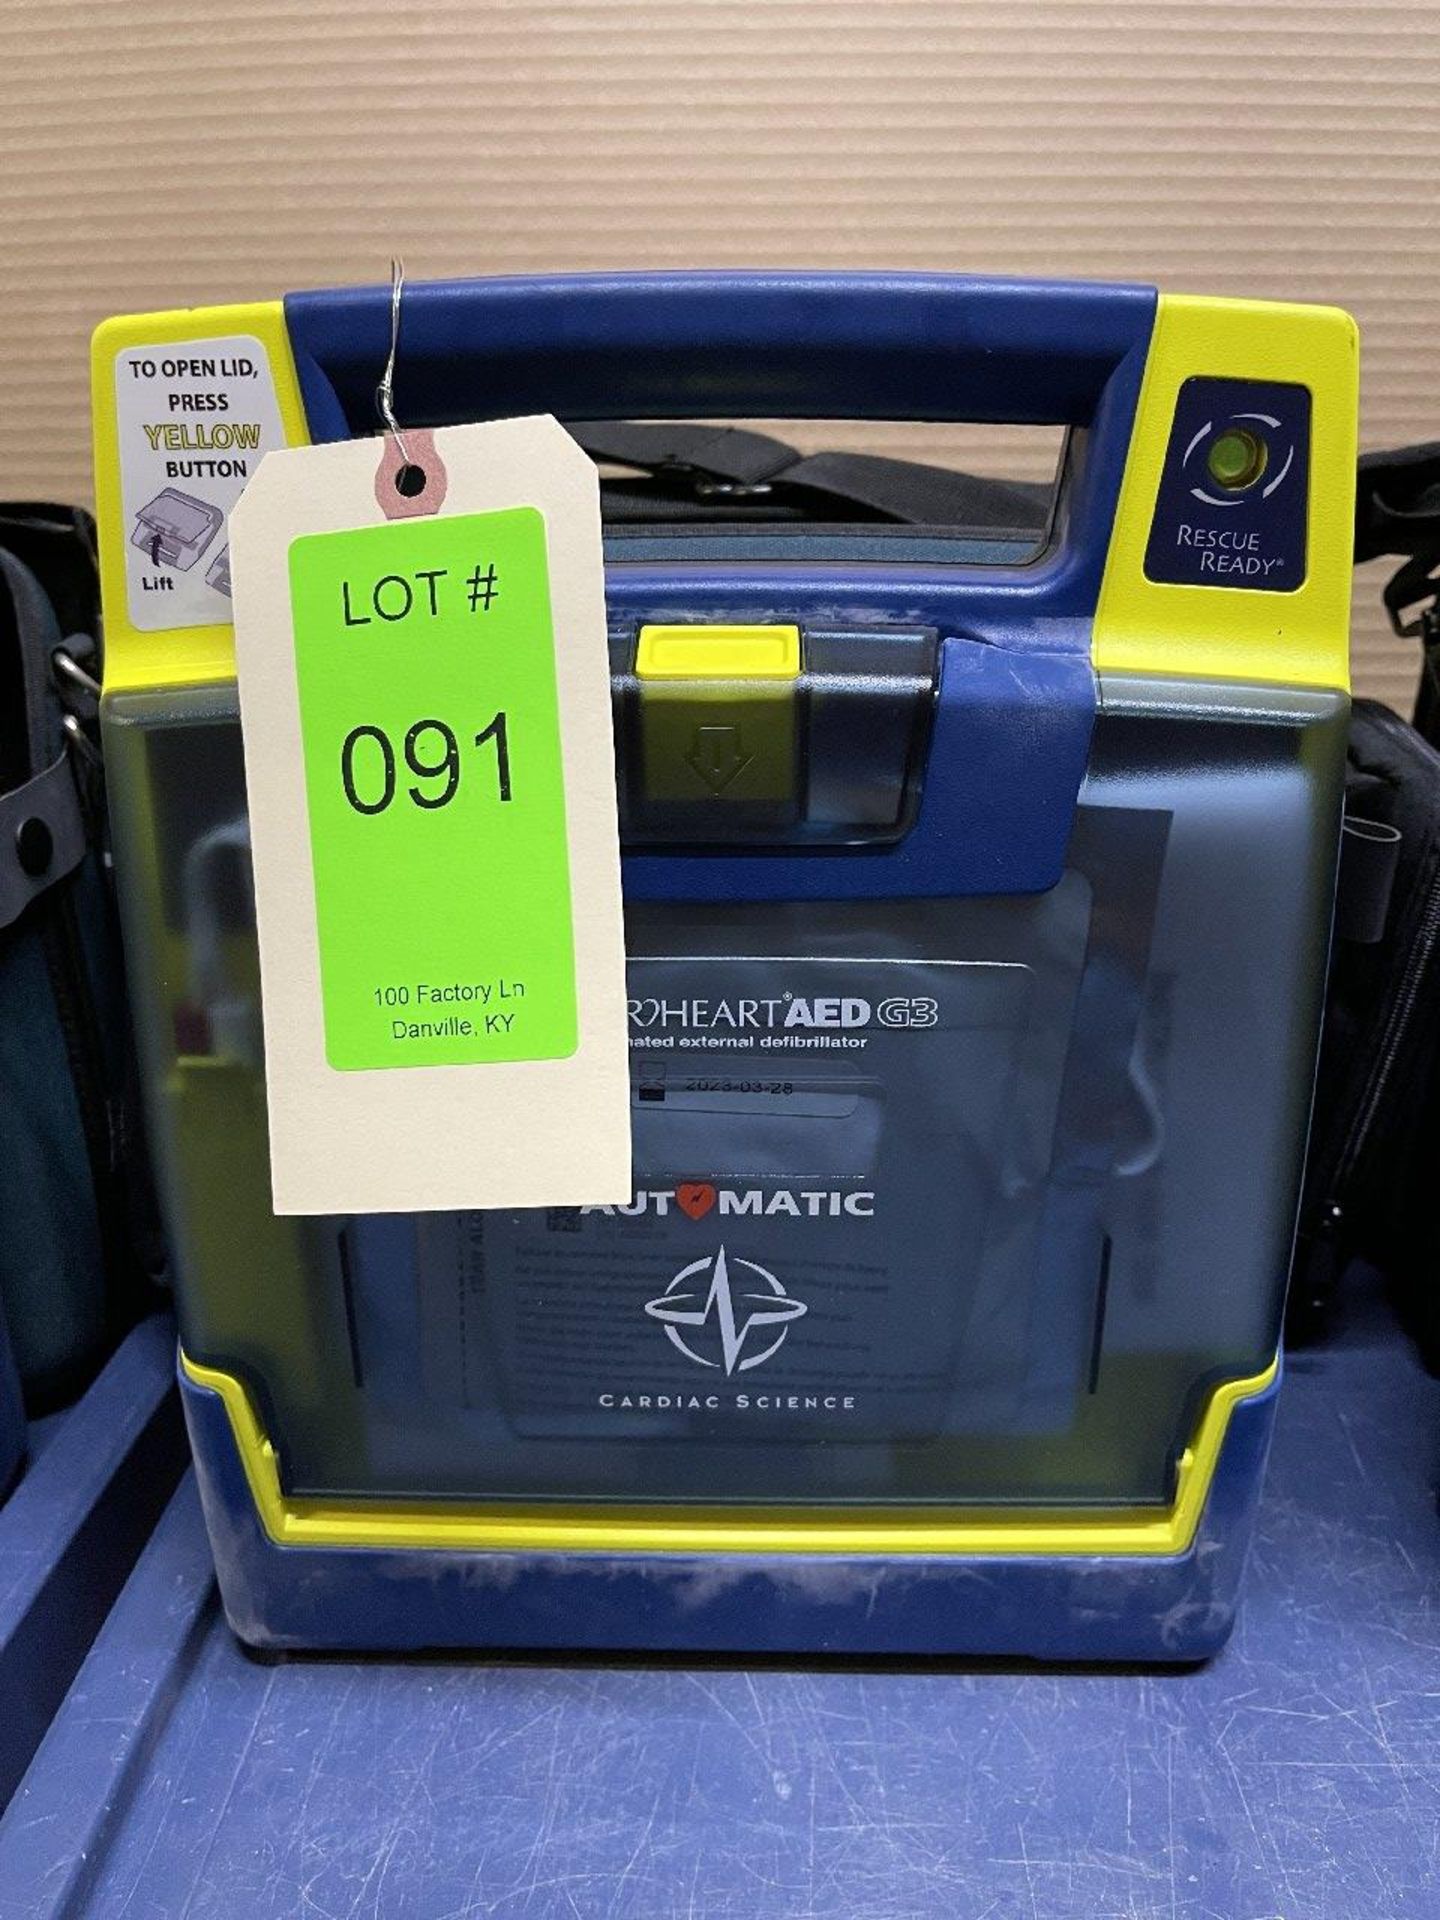 Cardiac Science Powerheart AED G3 Defibrillators - Image 4 of 6